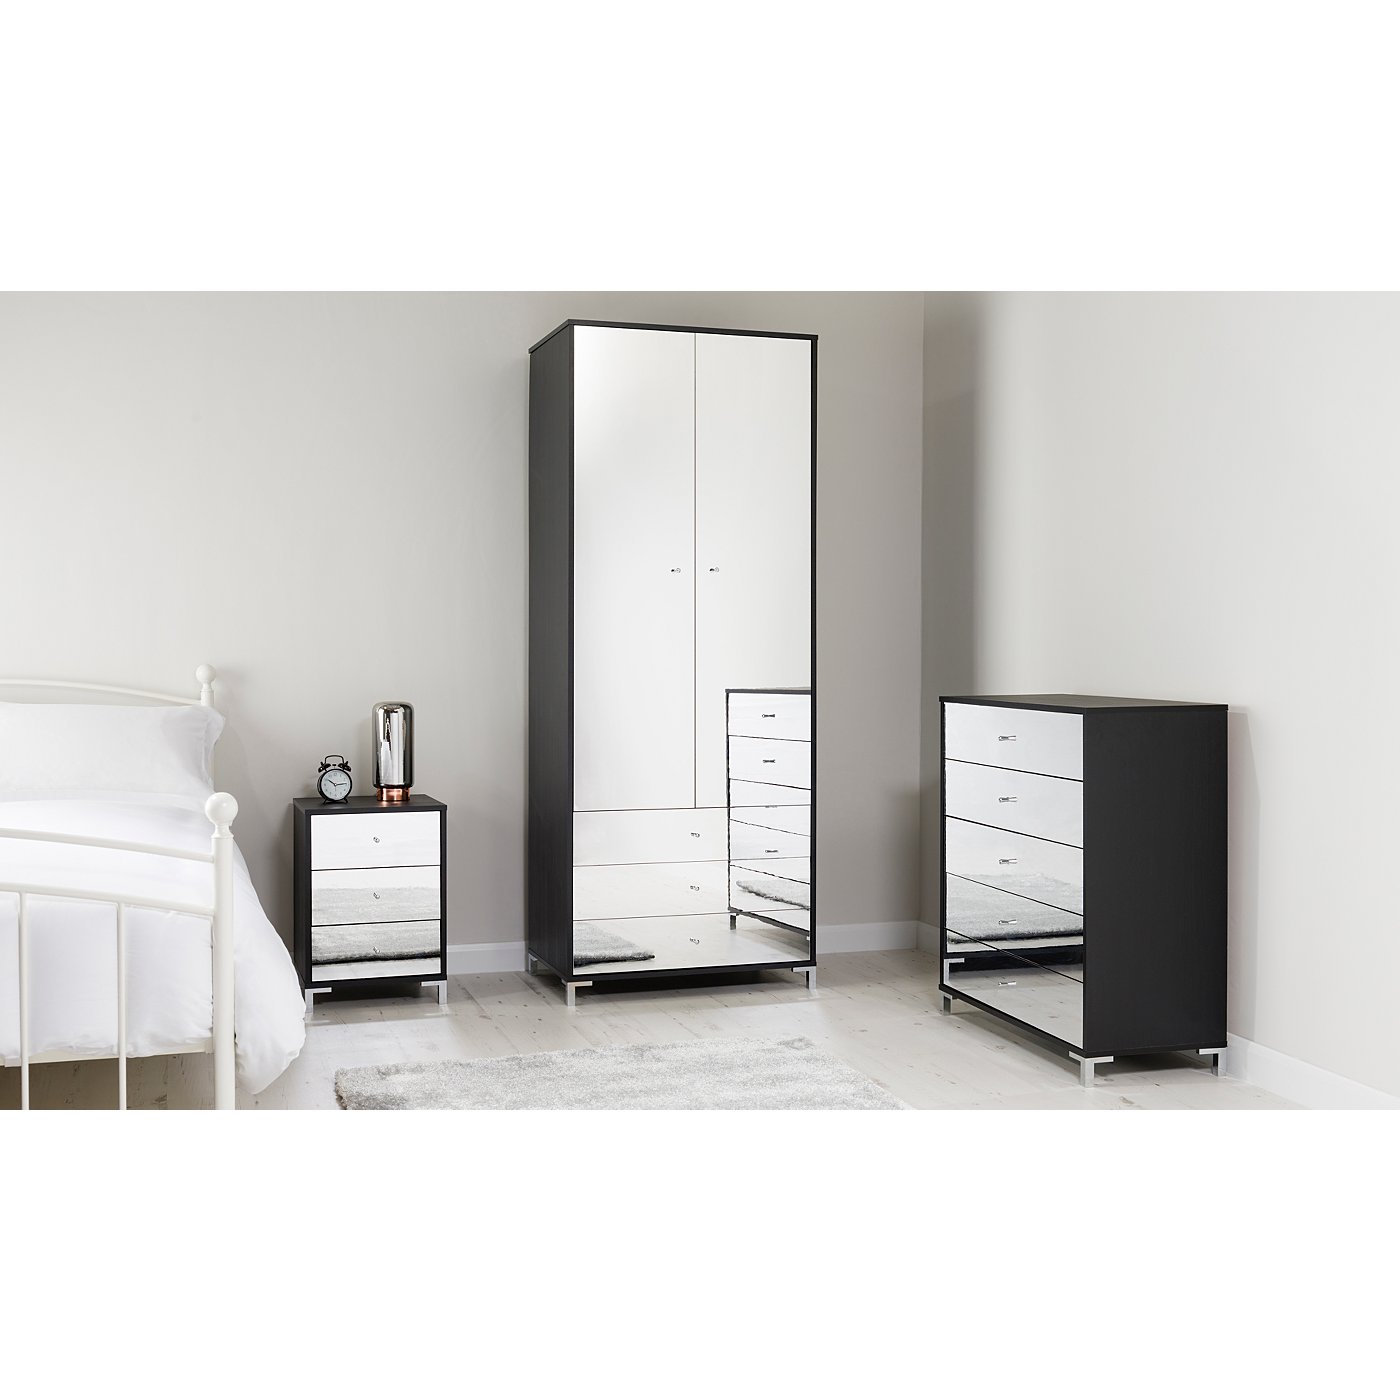 Shona Bedroom Furniture Range Black Oak Effect And Mirror Effect